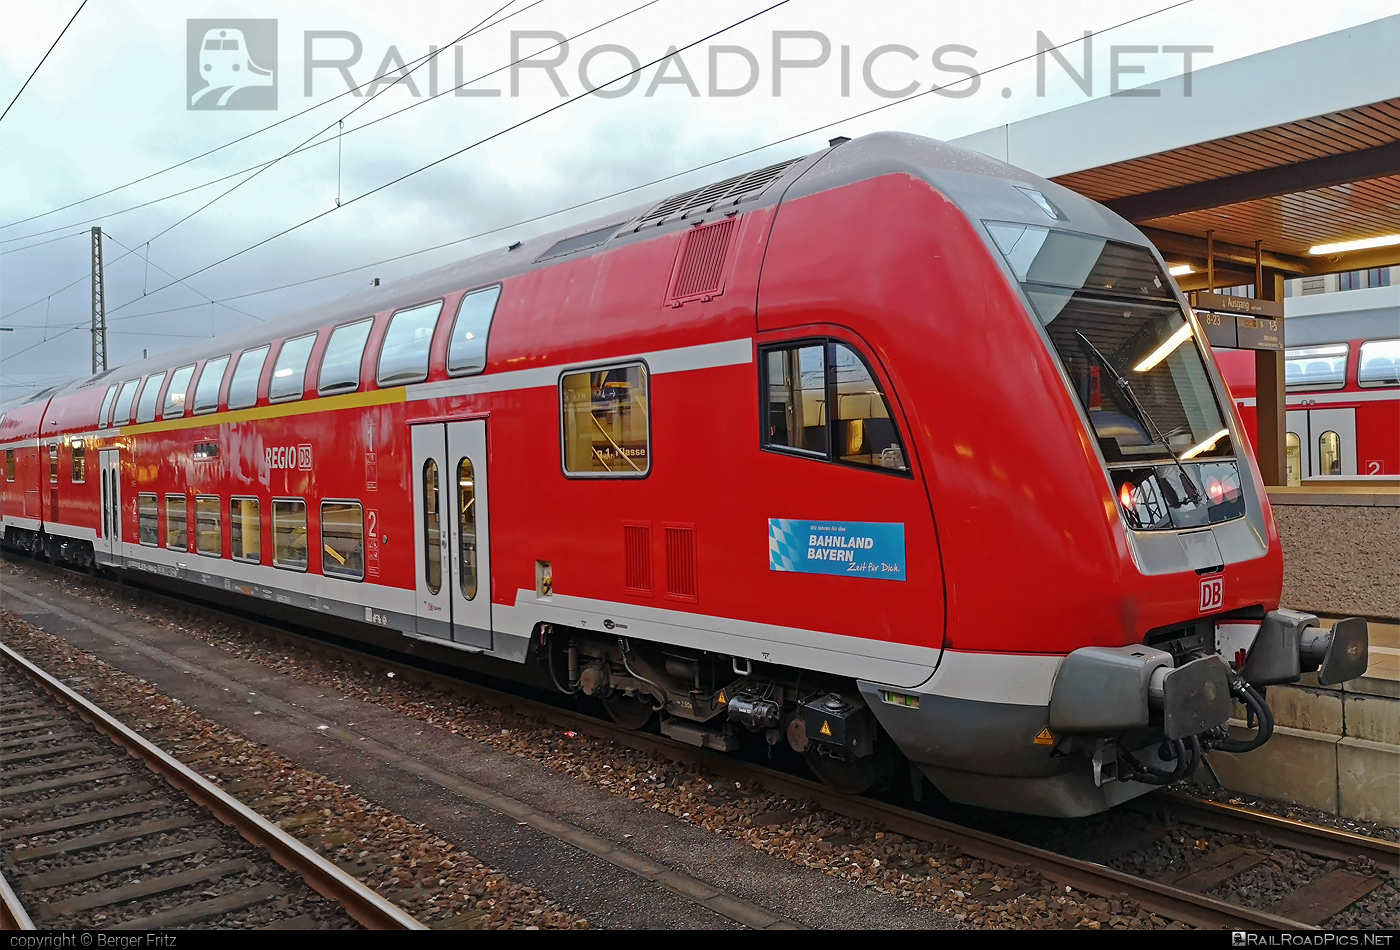 Class DAB - DABpbzfa 764.0 - 86-35 017-2 operated by DB Regio AG #DBregio #DBregioAG #bahnlandbayern #dabpbzfa #db #deutschebahn